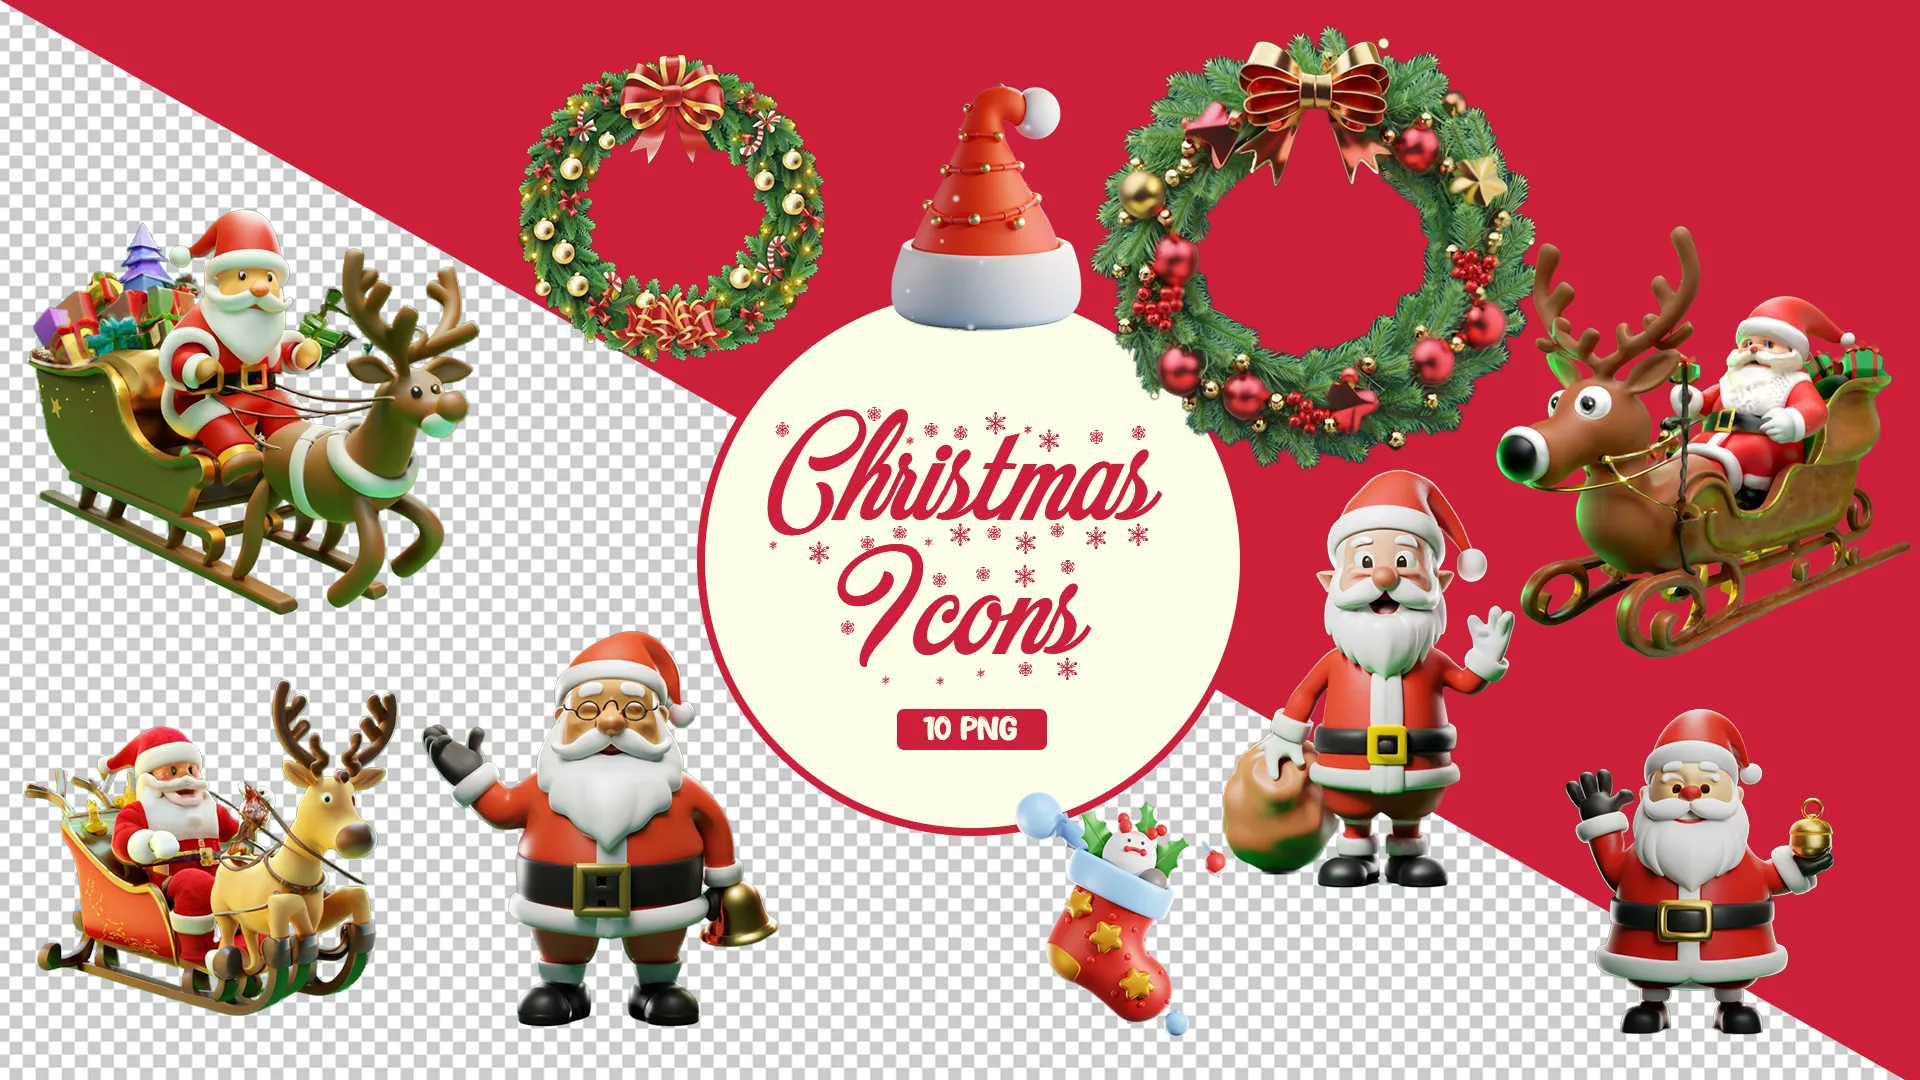 Christmas Icon and Santa Figures 3D image